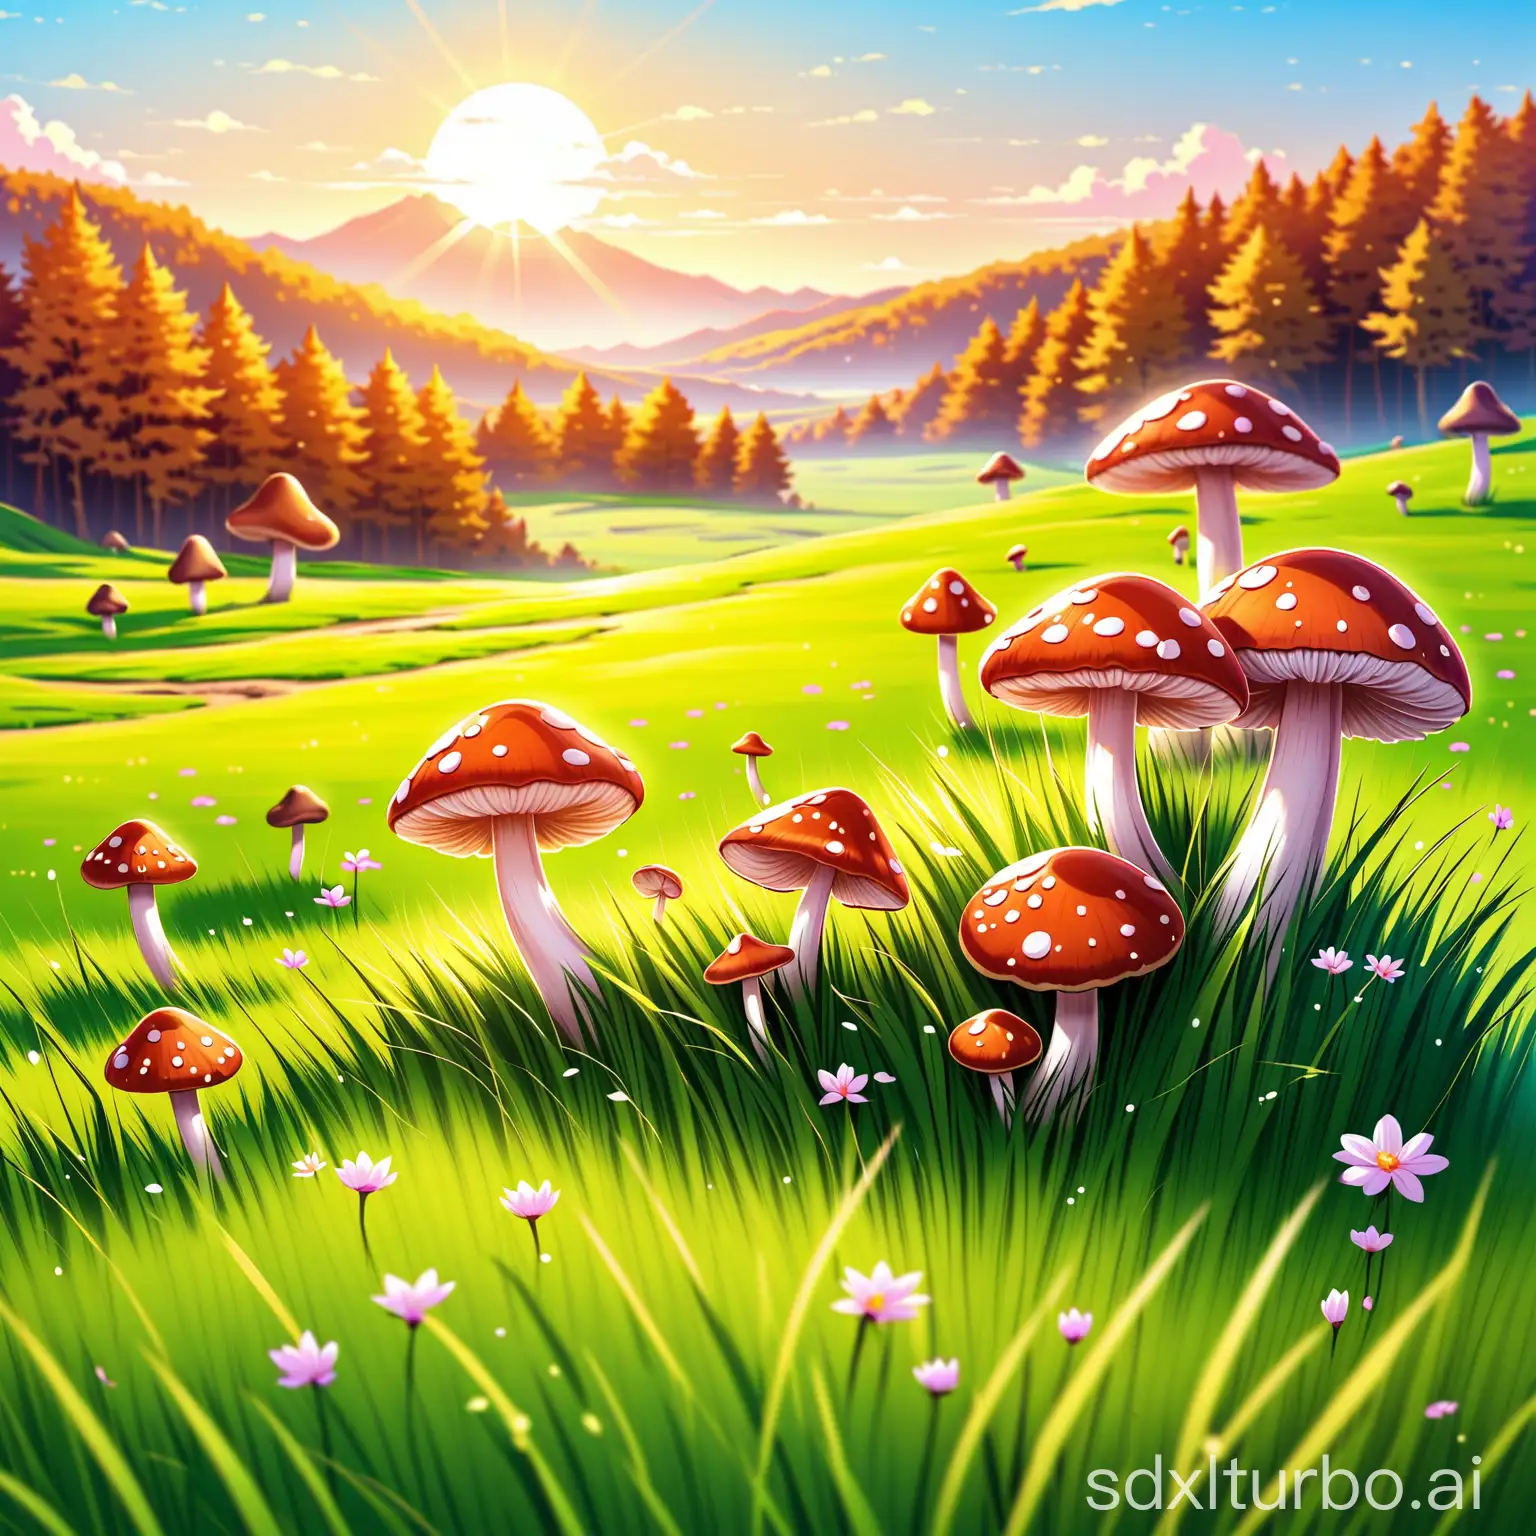 Mushrooms on the grassland